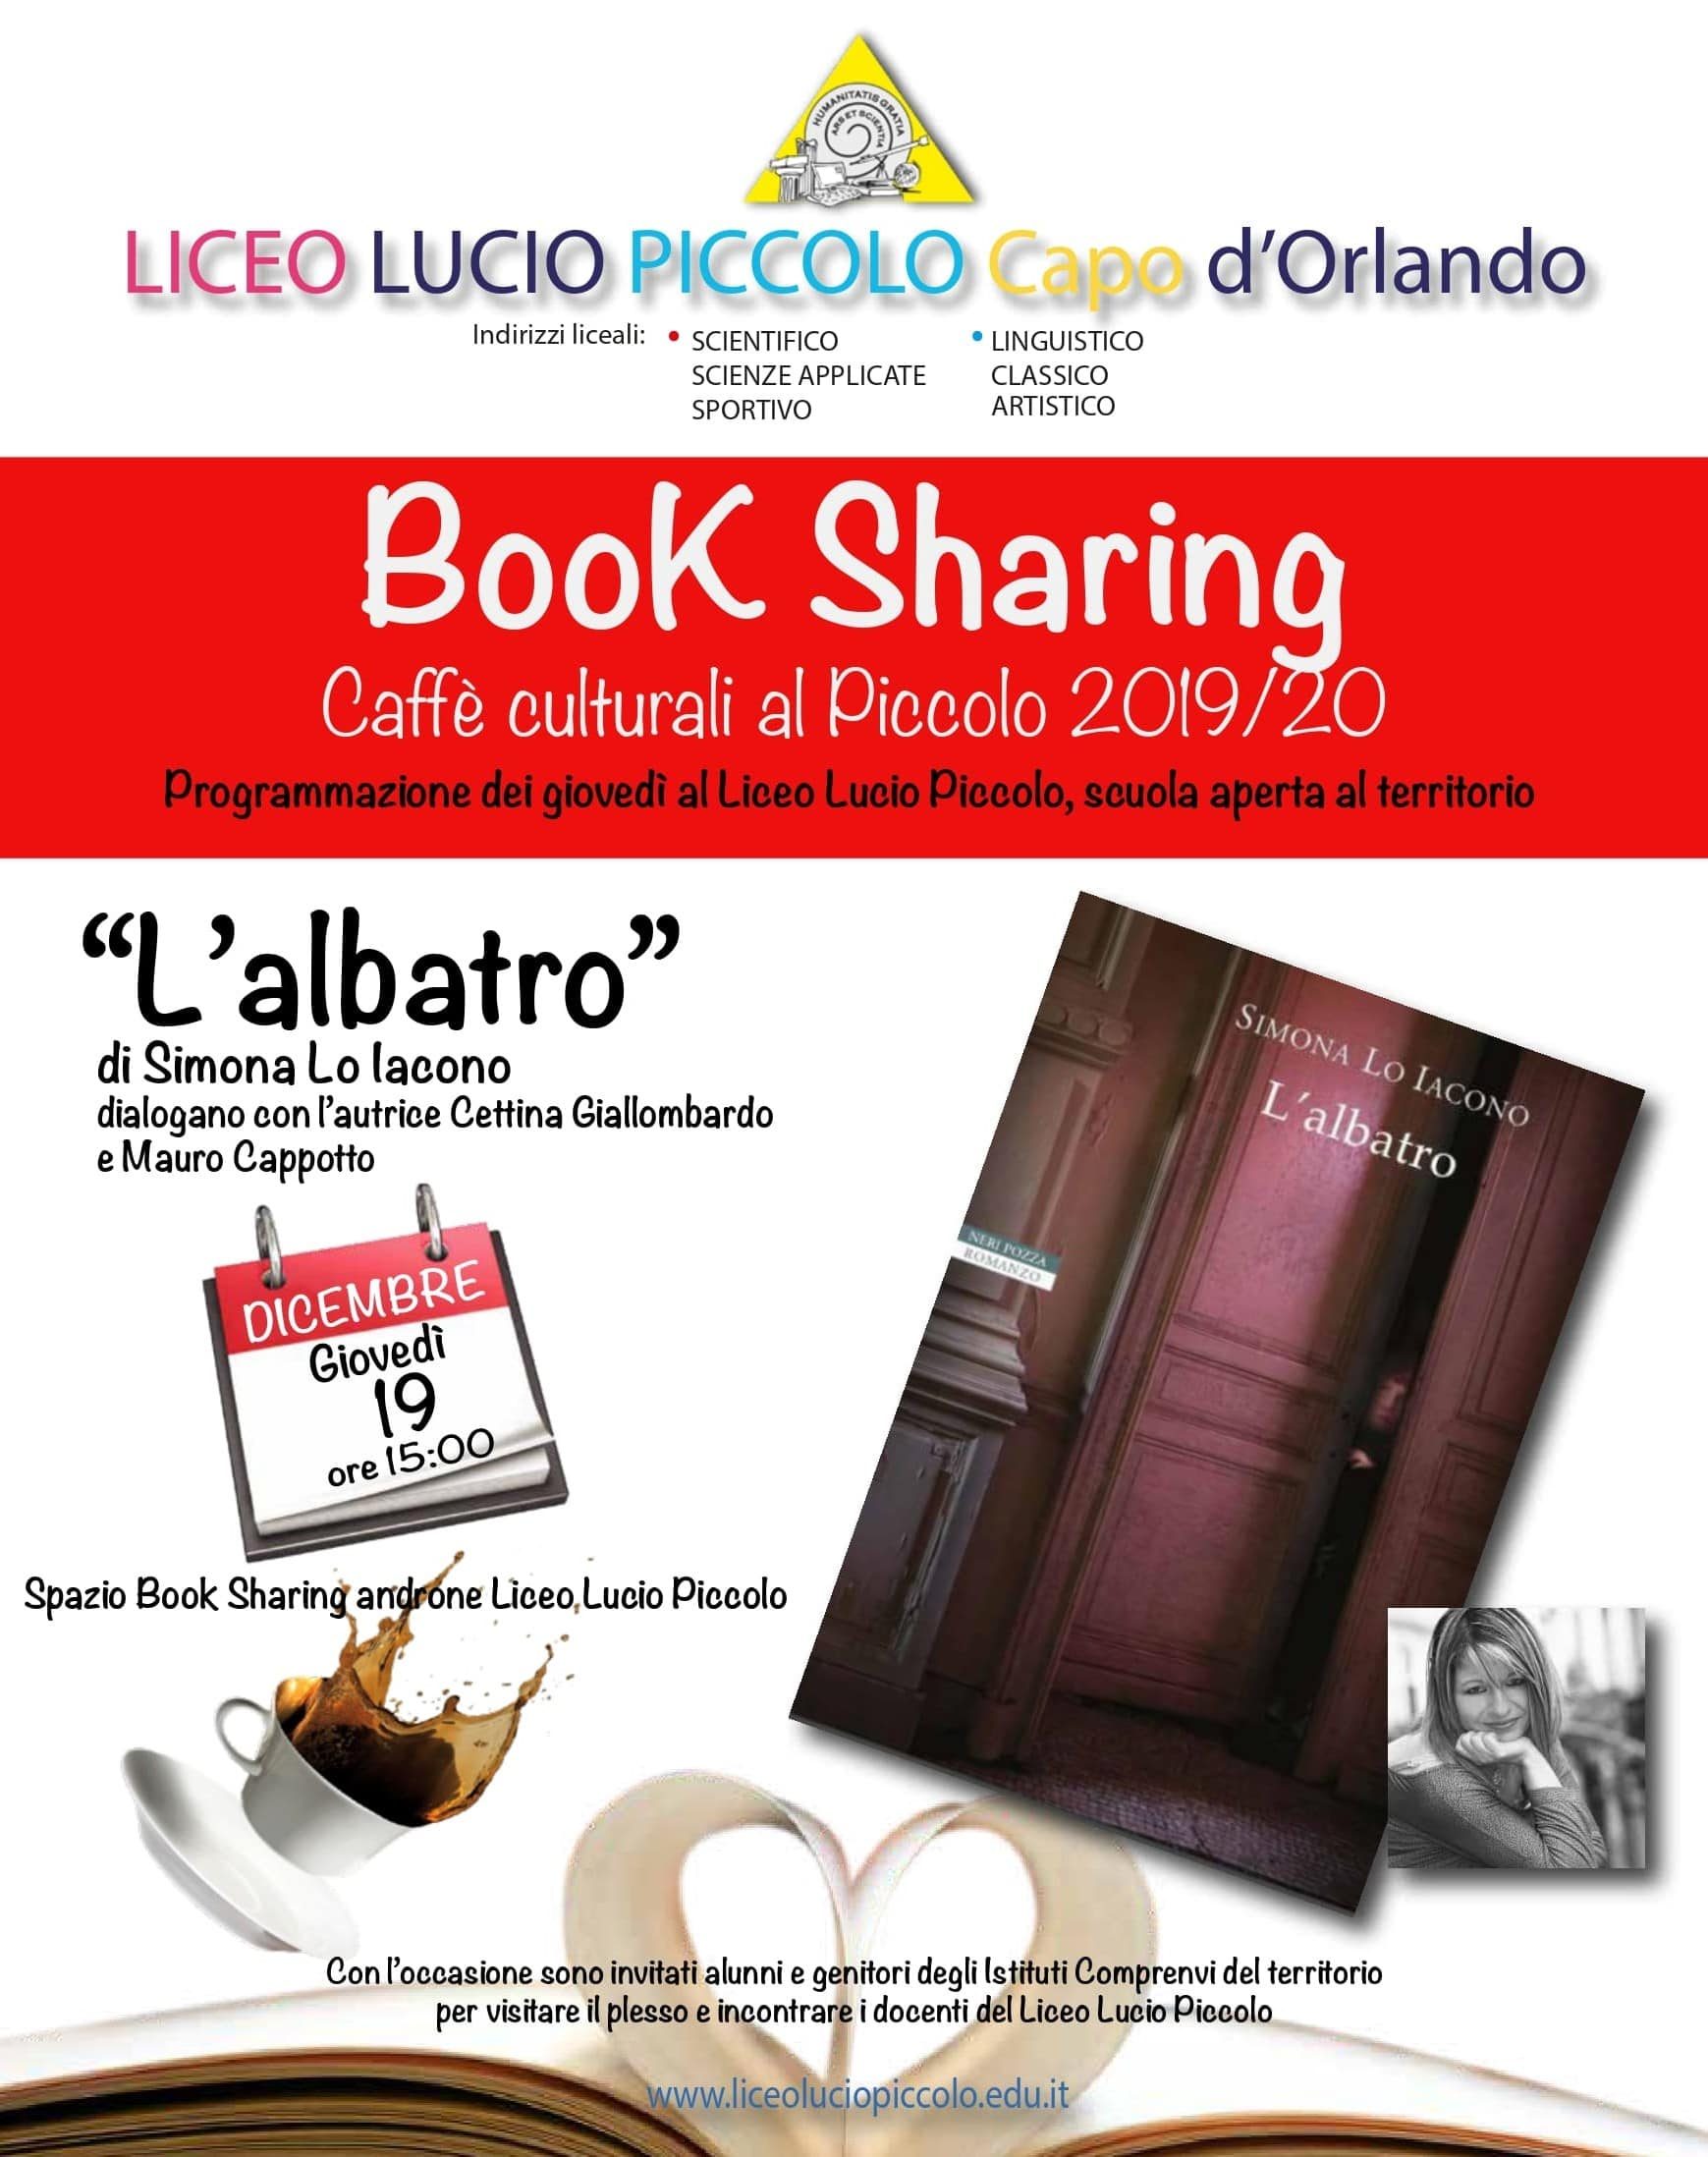 Book-Sharing-locandina-incontro-19-12-2019_page-0001-min-min